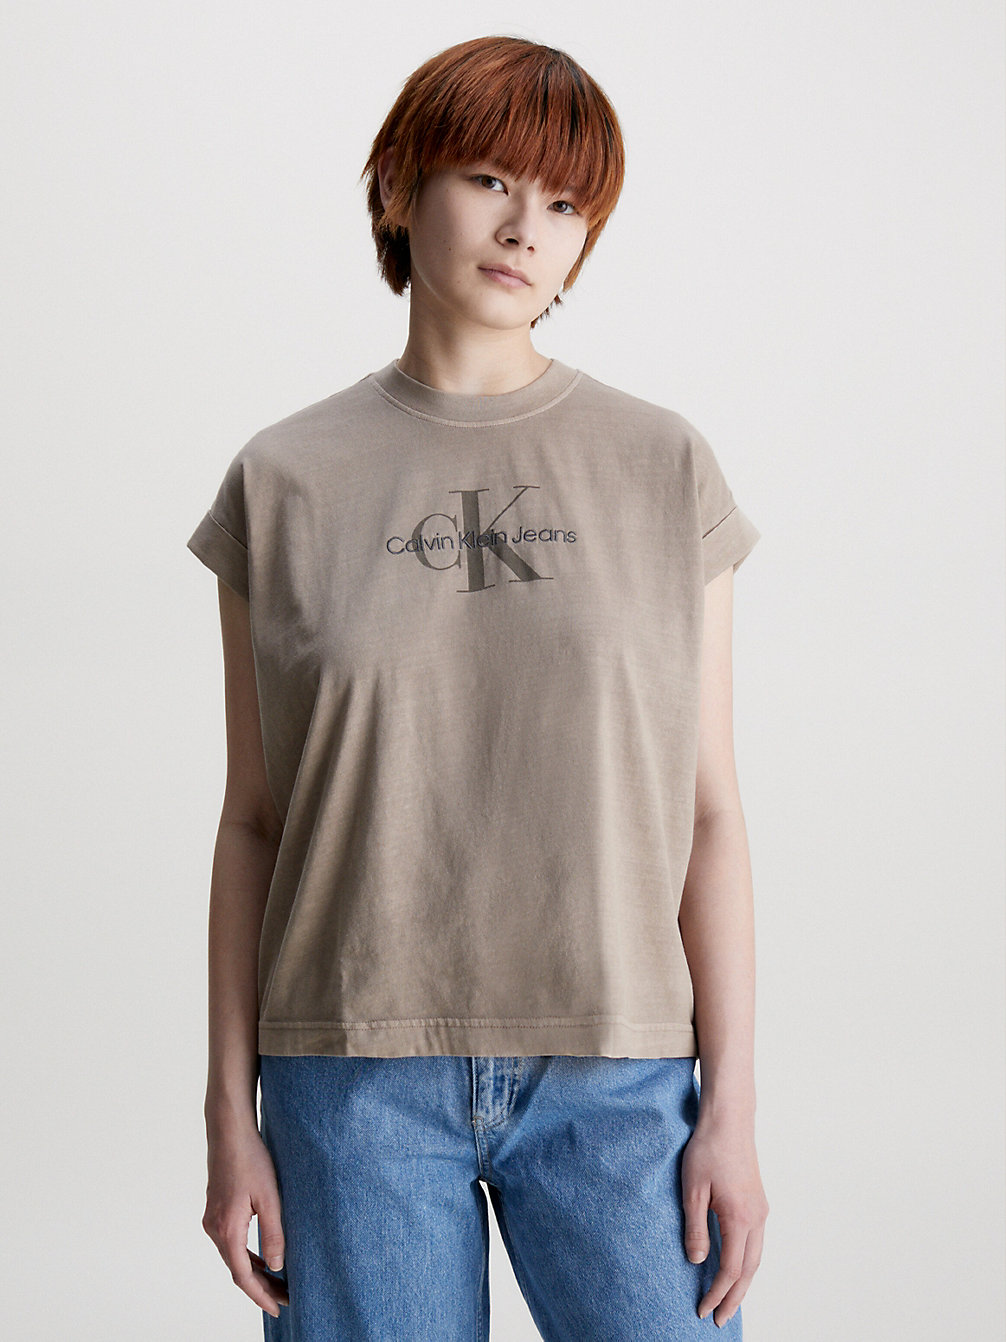 T-Shirt Con Monogramma Dal Taglio Relaxed > SHITAKE > undefined donna > Calvin Klein